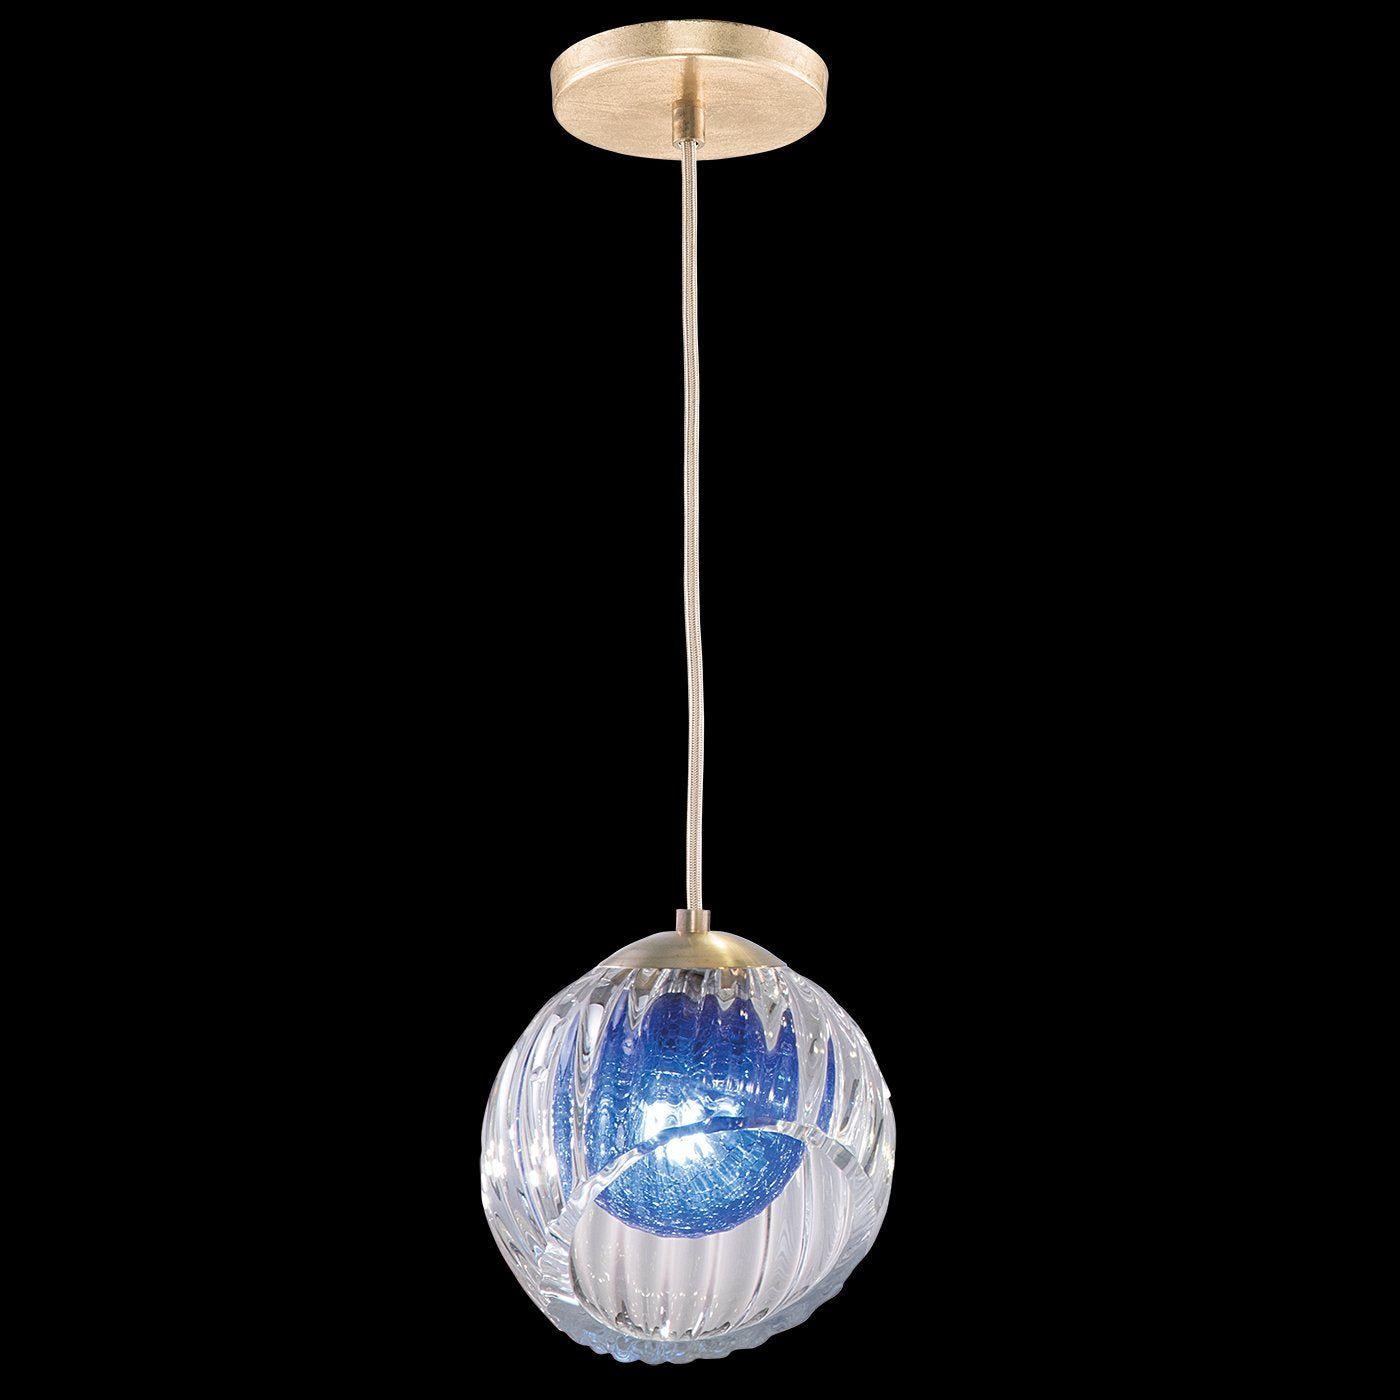 Fine Art Handcrafted Lighting - Nest Mini Pendant - Lights Canada